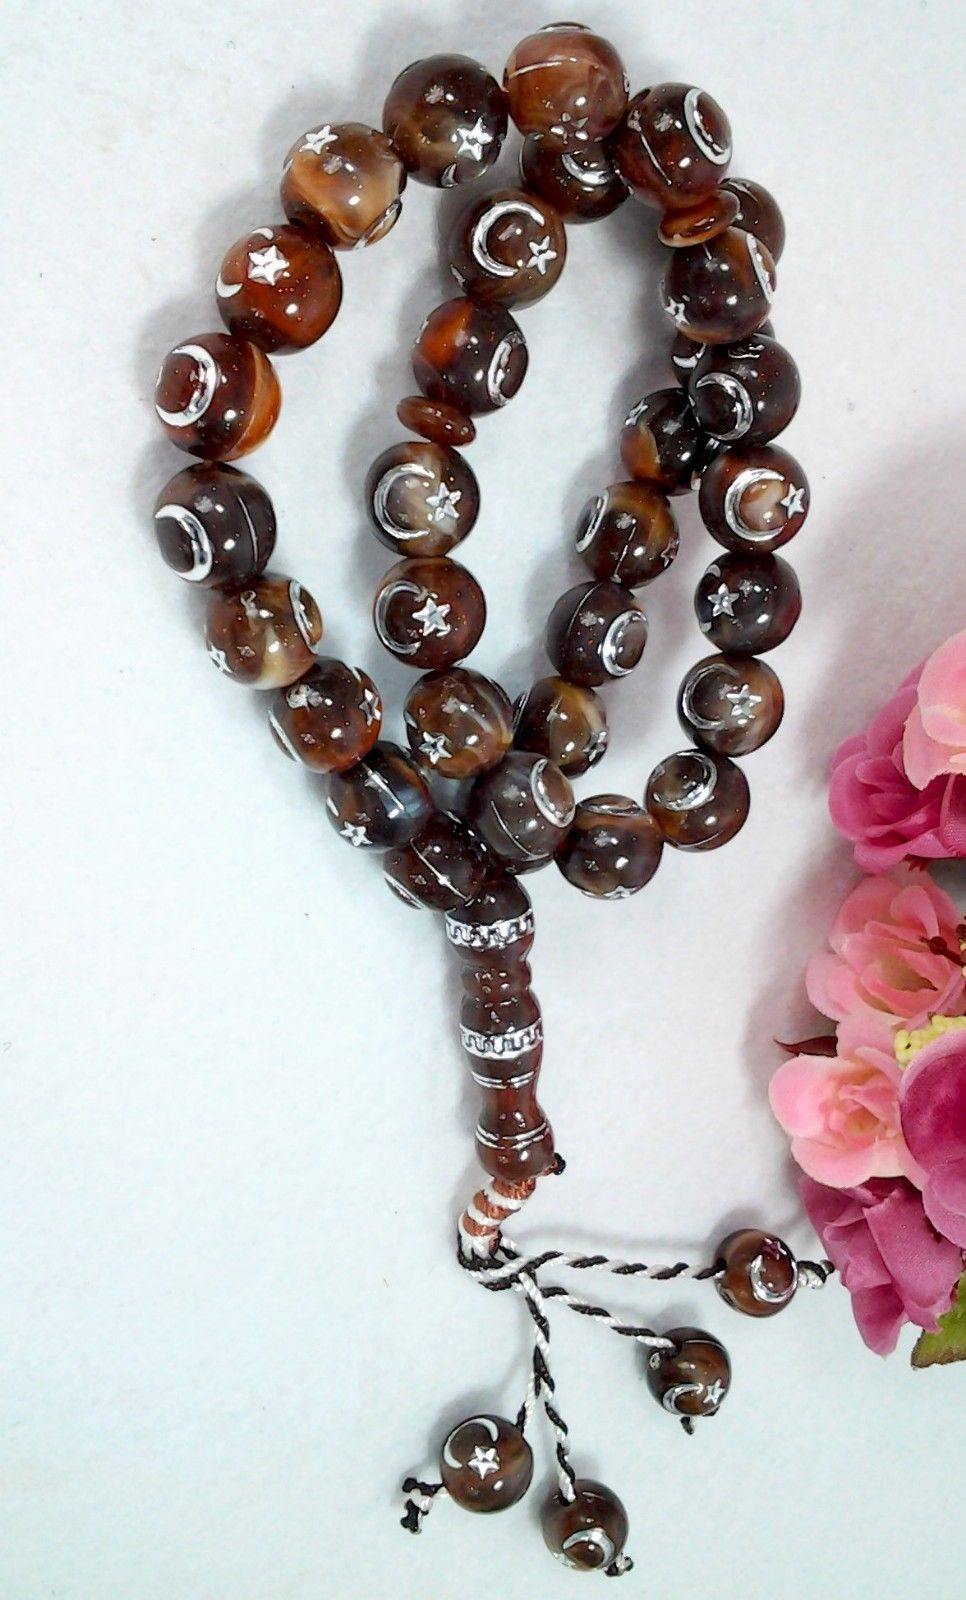 12mm Prayer Beads 33 Misbaha Tasbih Tasbeeh Islamic Salah Masbaha Star&Moon - Islamic Shop